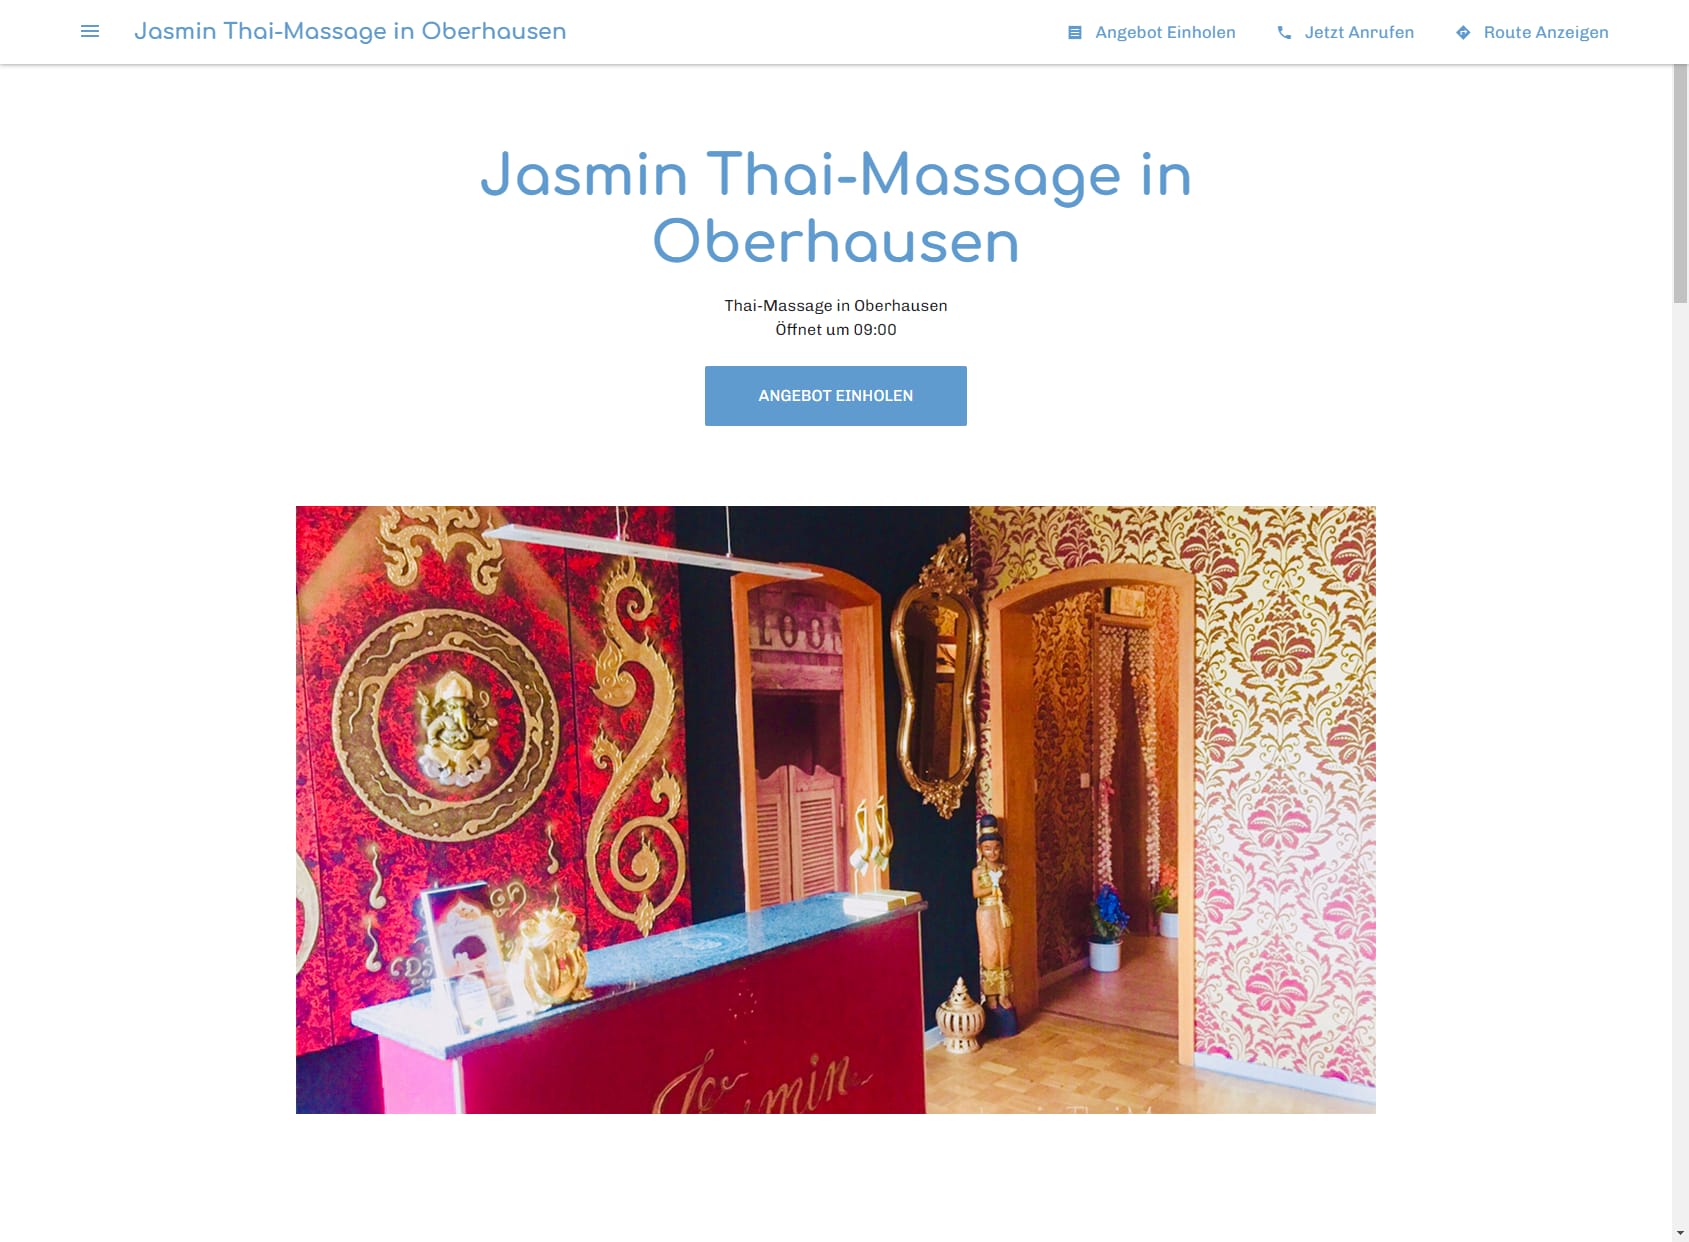 Jasmin Thai-Massage in Oberhausen